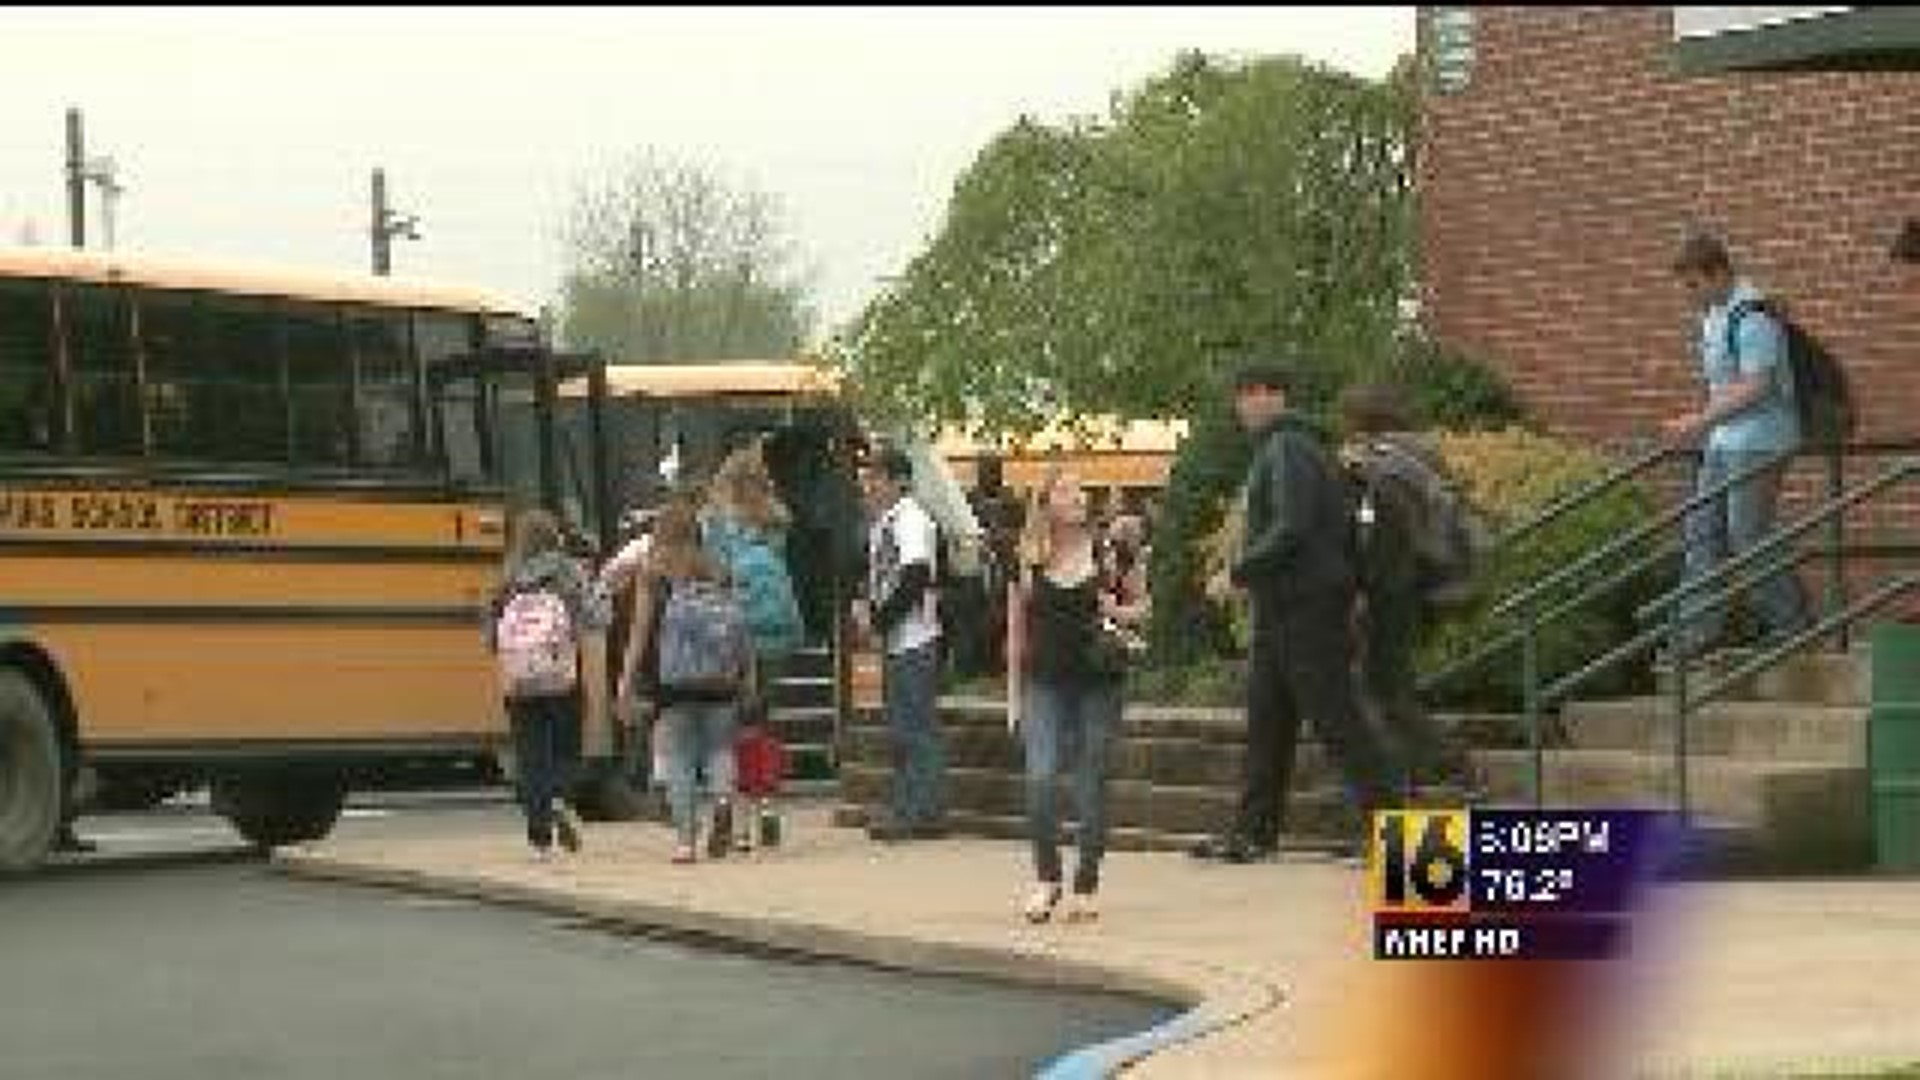 Schools Dismiss Due to "Threat"